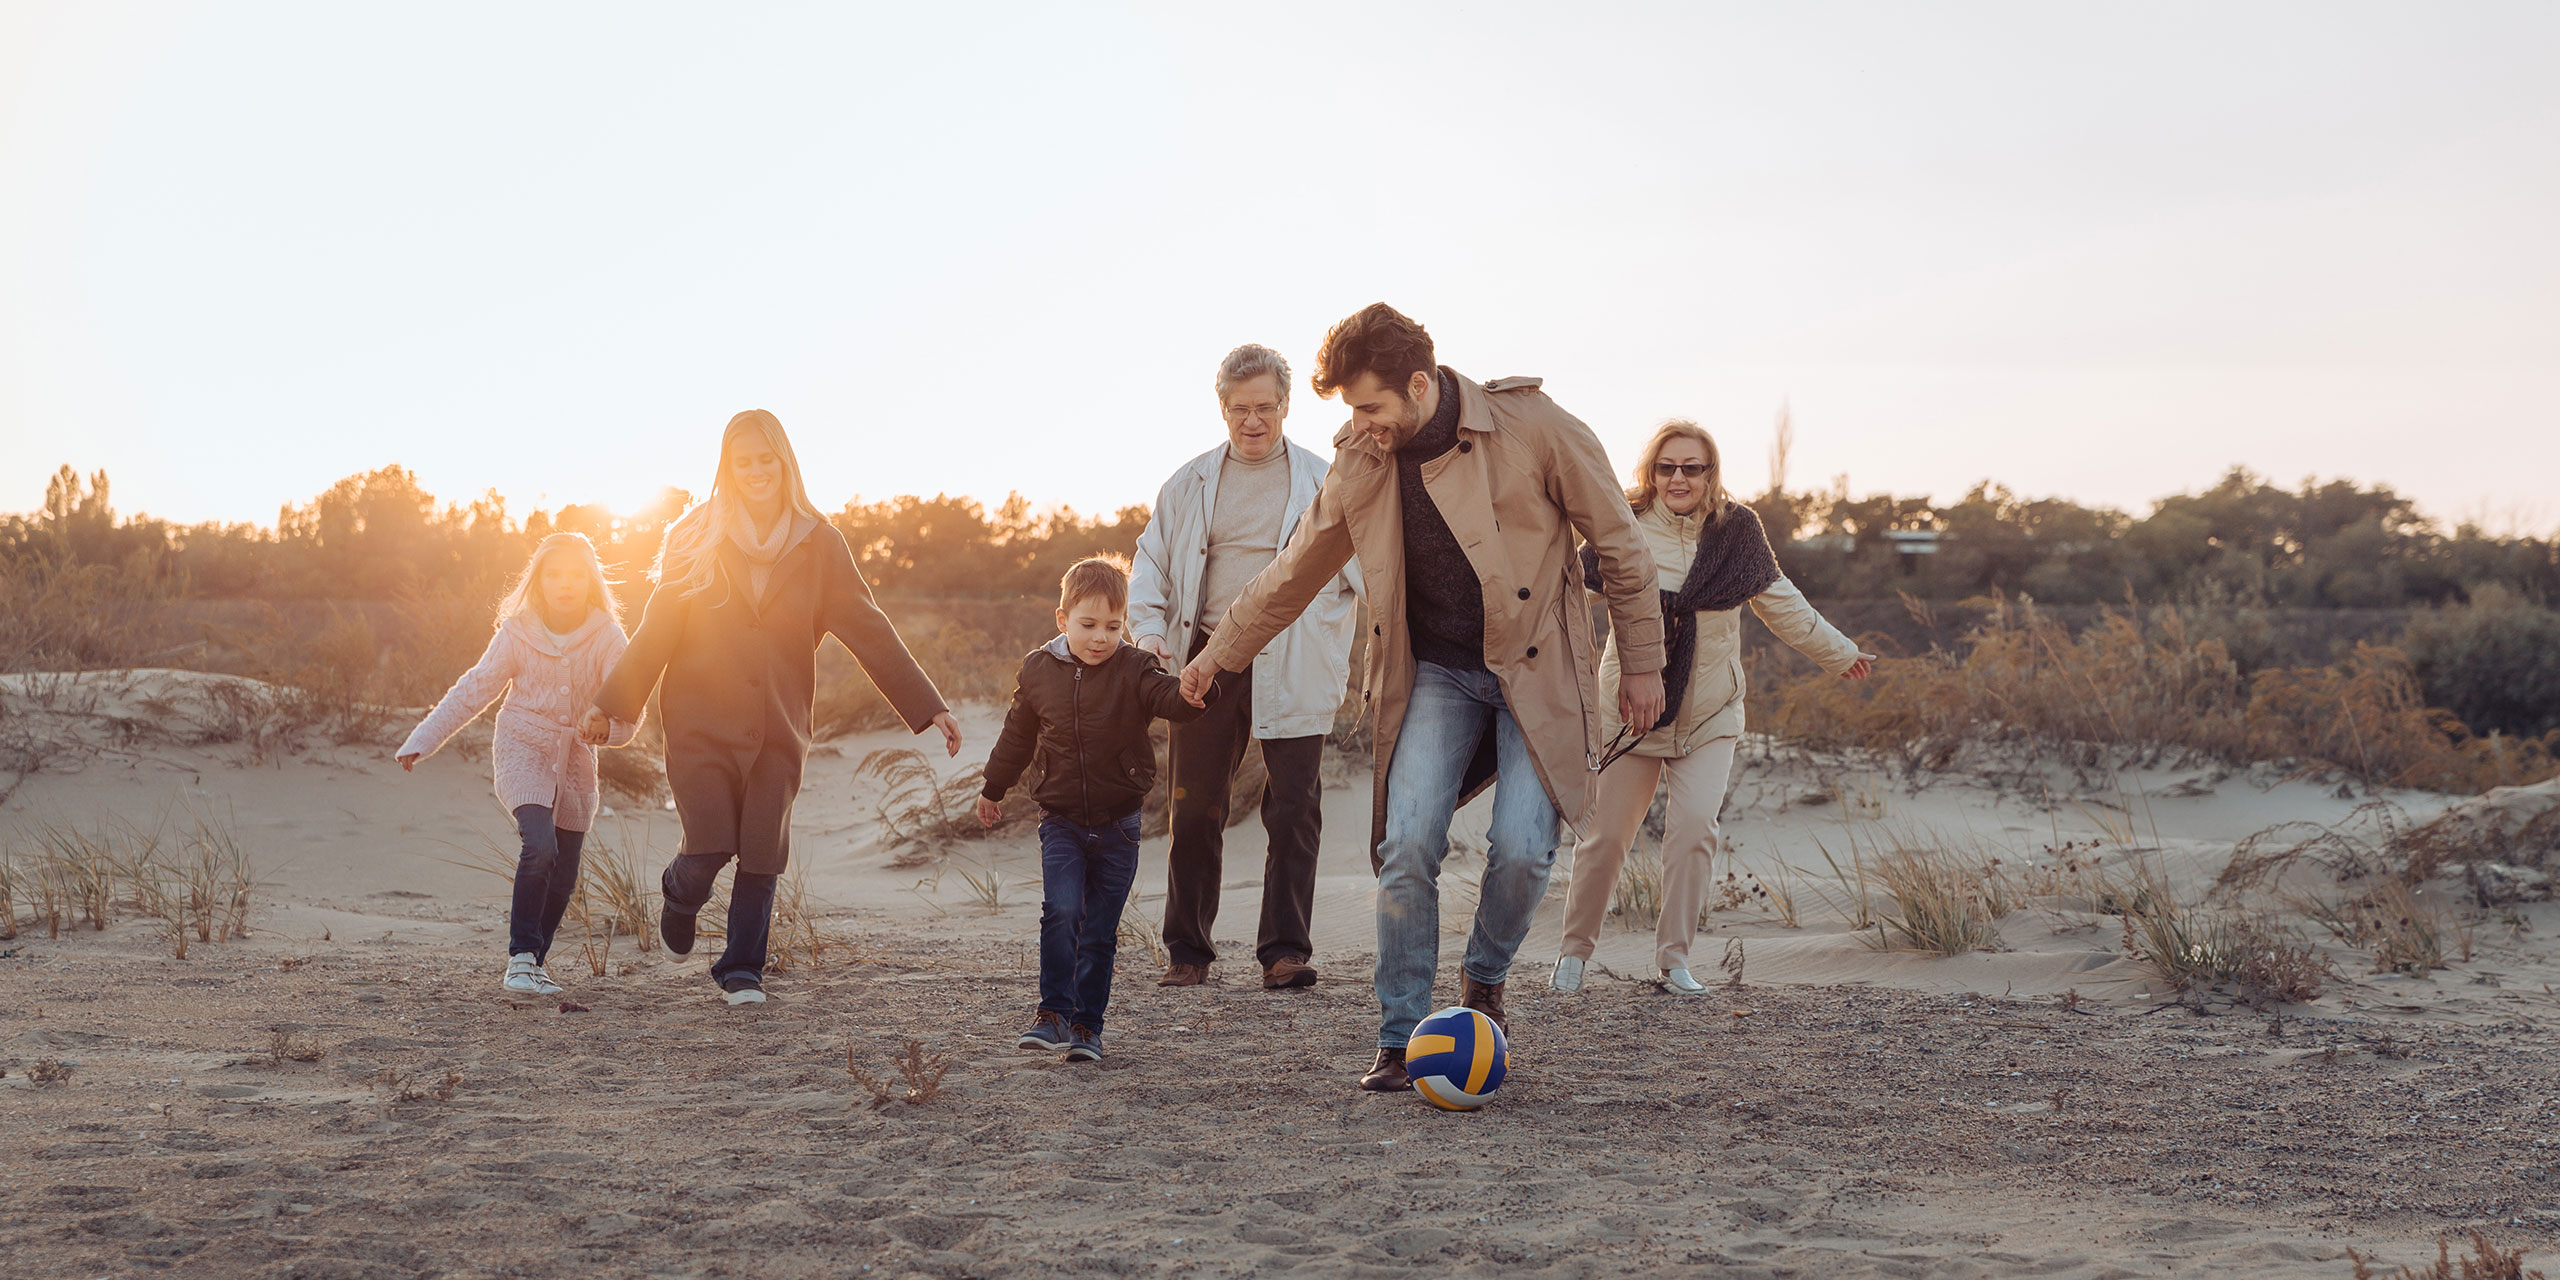 Multigenerational Family on the Beach; Courtesy of LightField Studio/Shutterstock.com